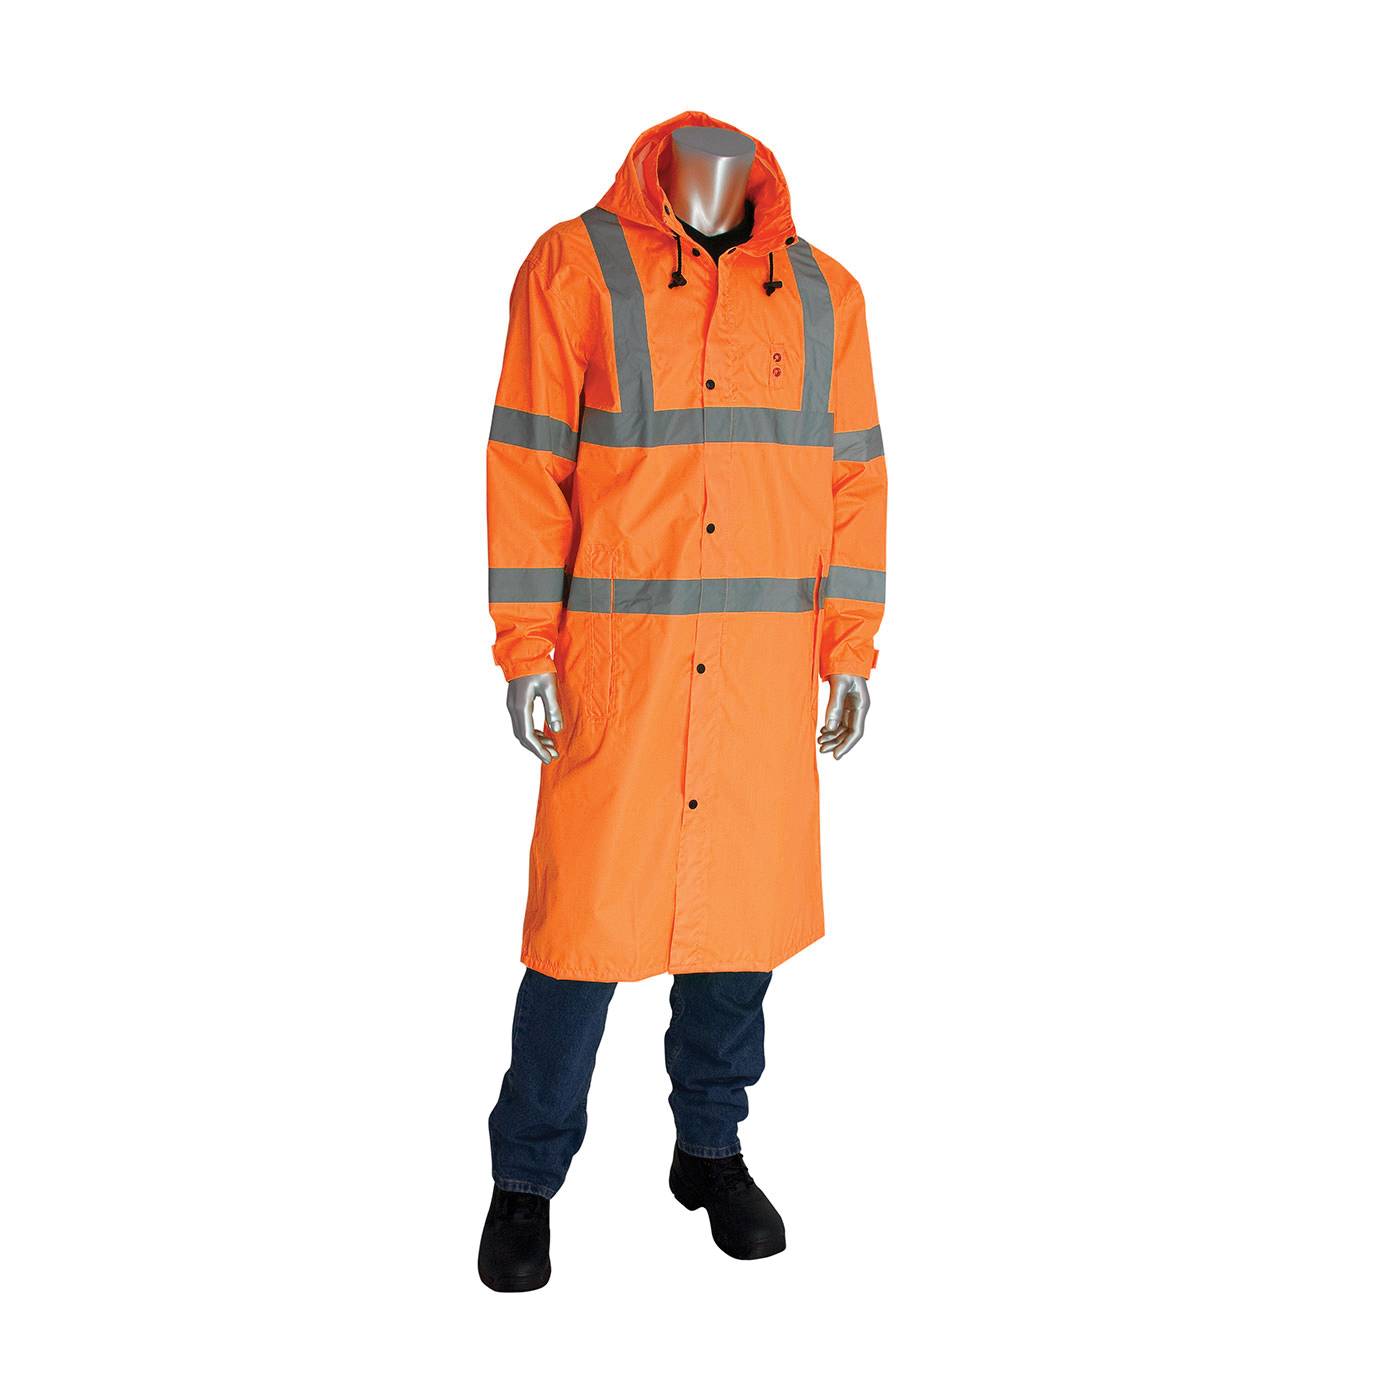 PIP® FALCON™ Viz™ 353-1048-OR/3X All Purpose Waterproof Rain Coat, 3XL, Hi-Viz Orange, 150D Polyester Coated with Polyurethane, Resists: Water, ANSI 107 Type R Class 3, Concealed Hood